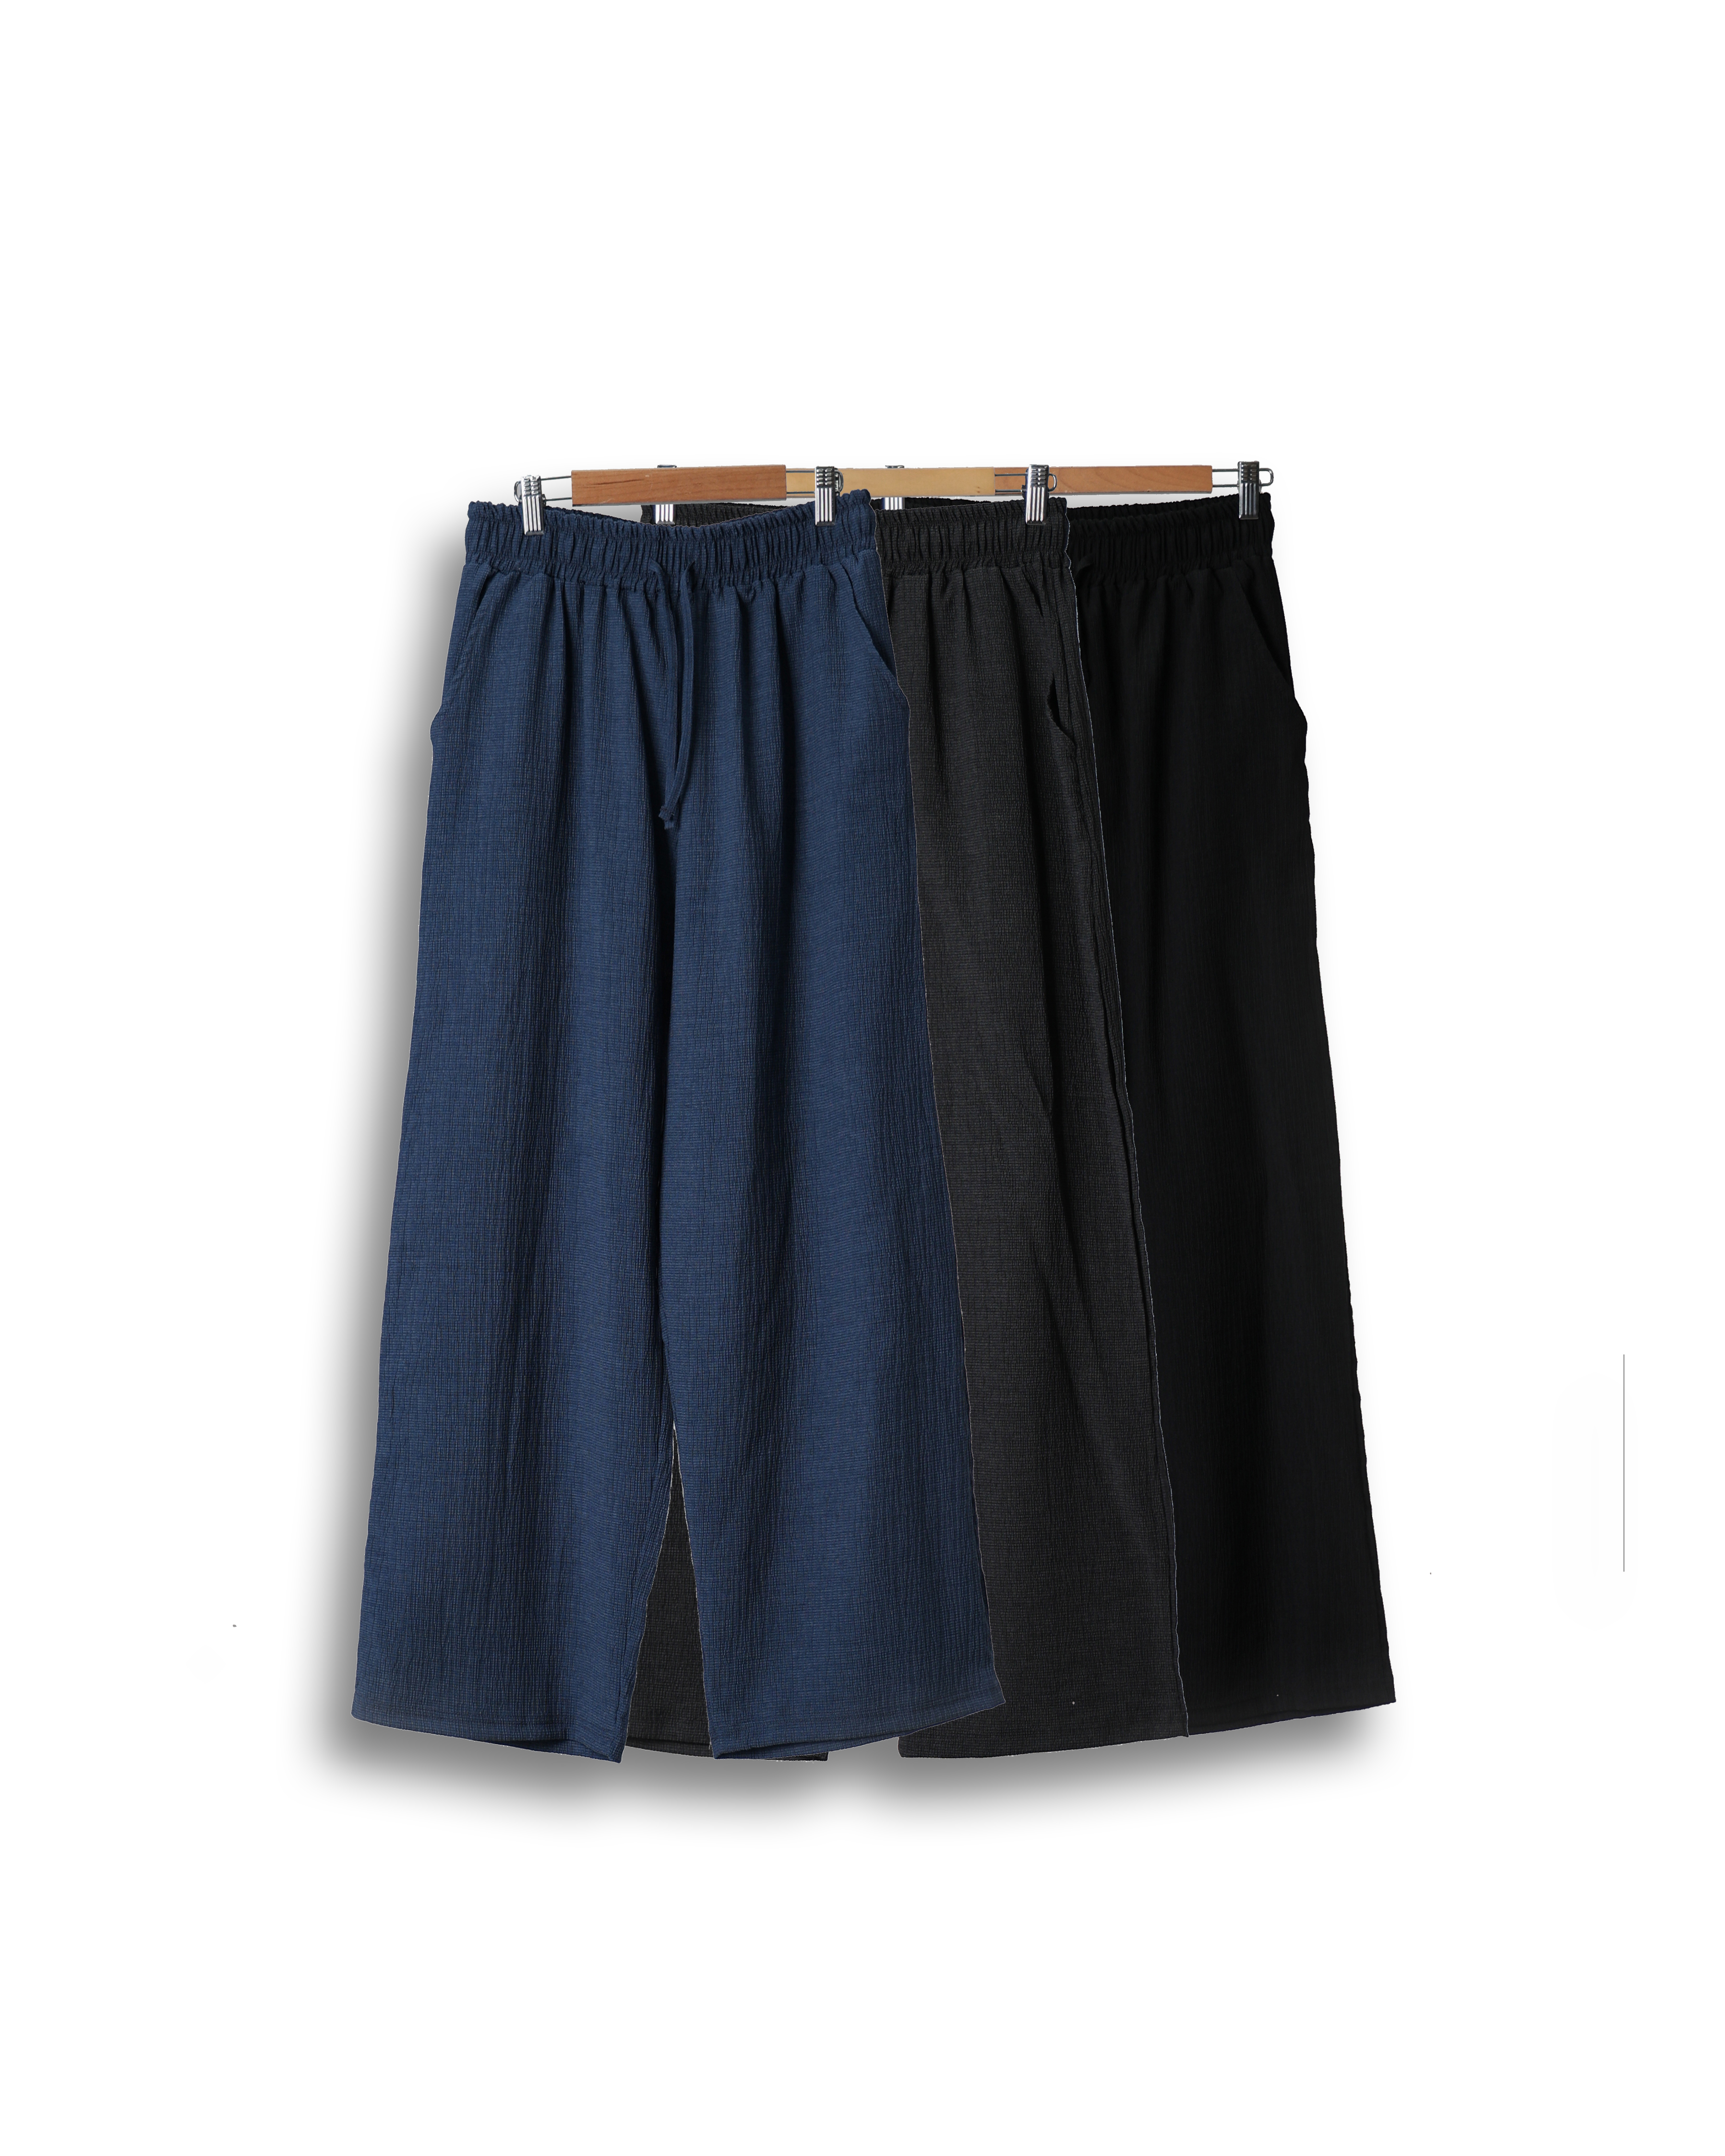 RAM Miracle Loose Pleats Pants (Black/Charcoal/Navy)